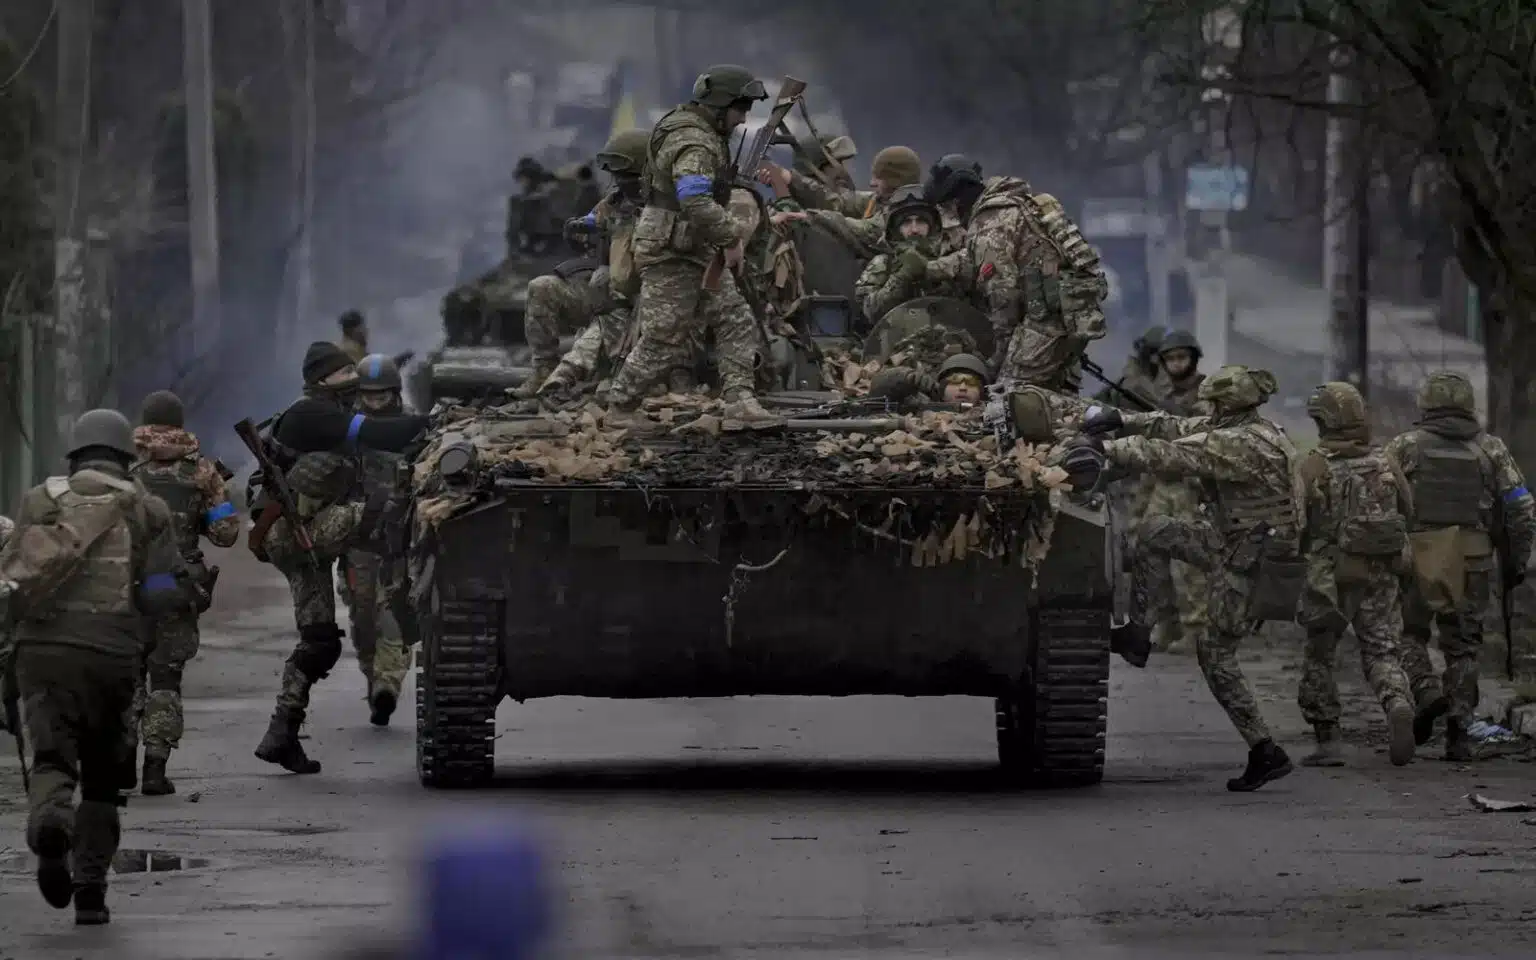 South Korea to provide possible military aid to Ukraine - Asiana Times